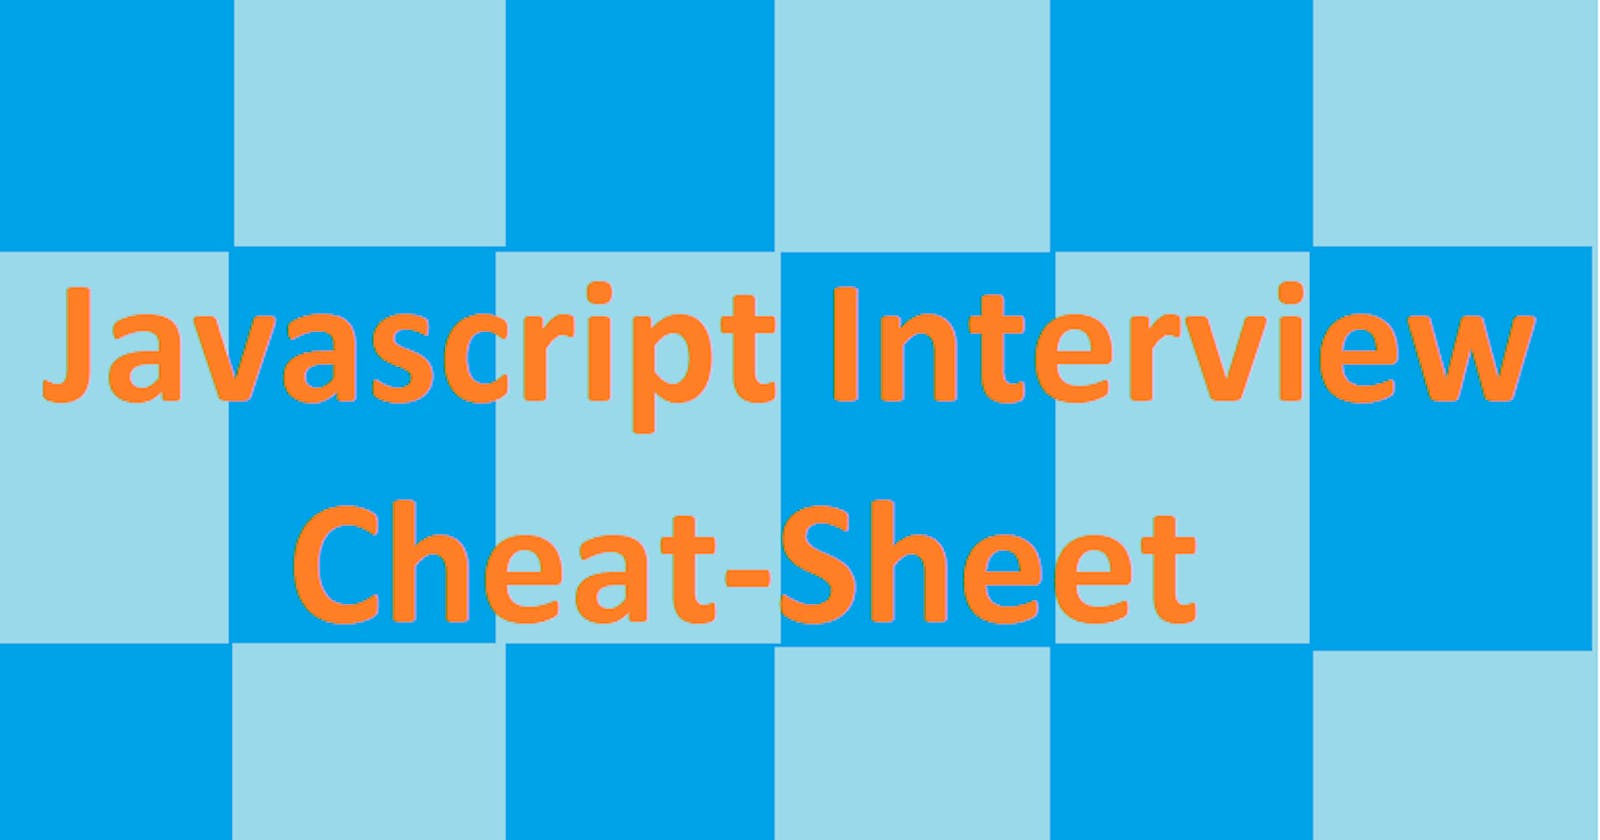 JavaScript Interview Cheat-sheet